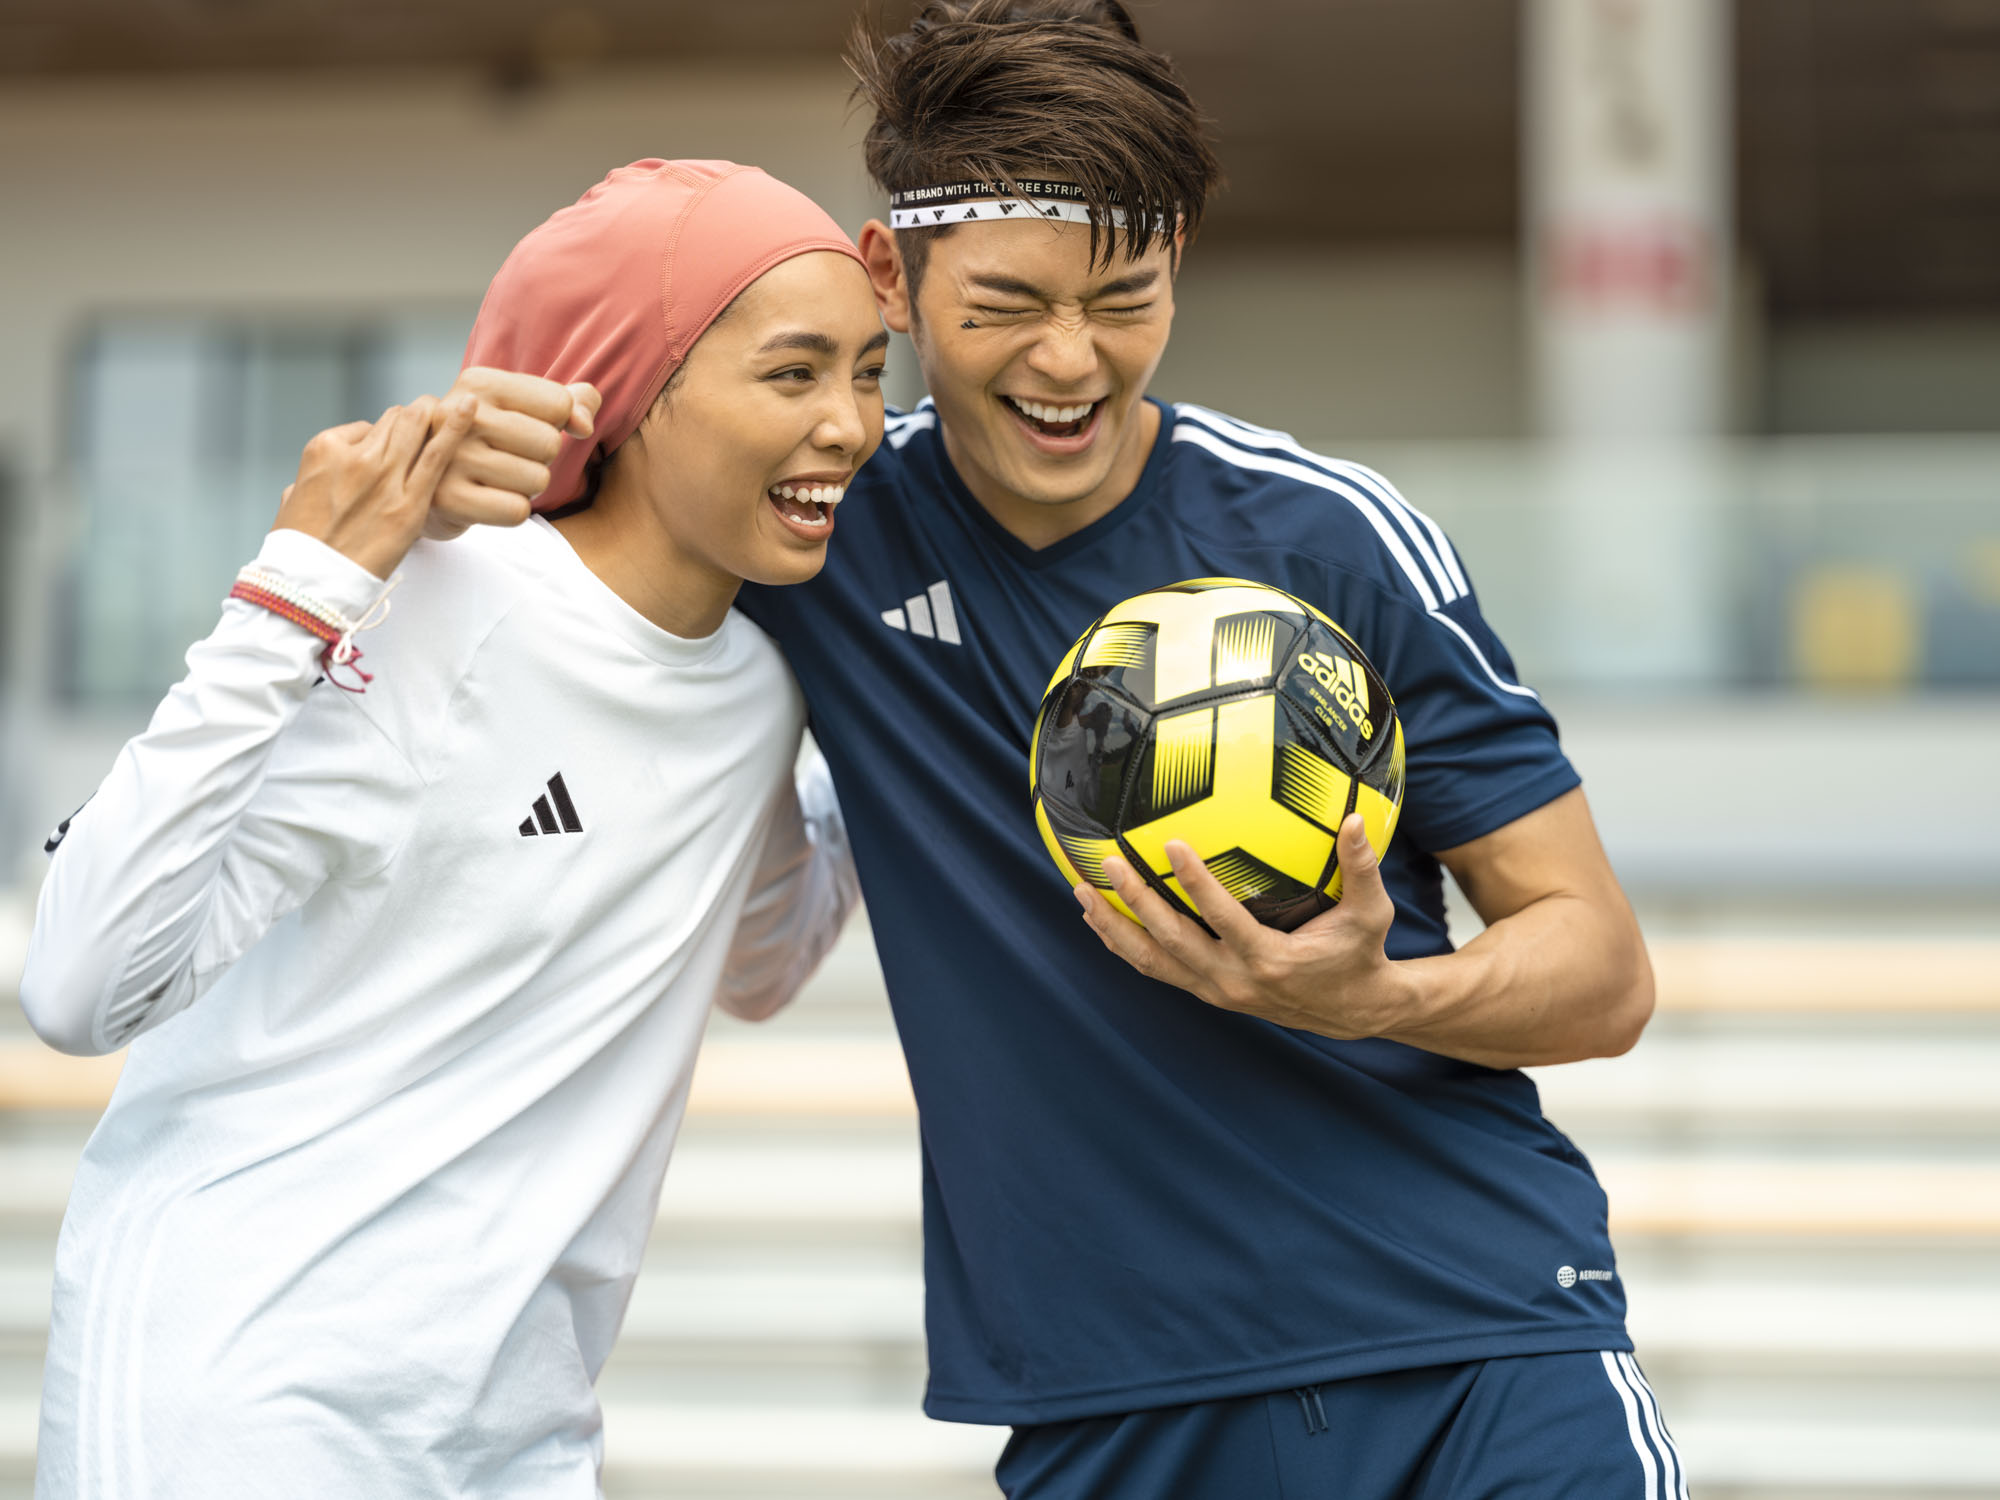 football ball soccer mix laughing Adidas Asia Singapore adiclub membership fashion photographer commercial studio sport photography